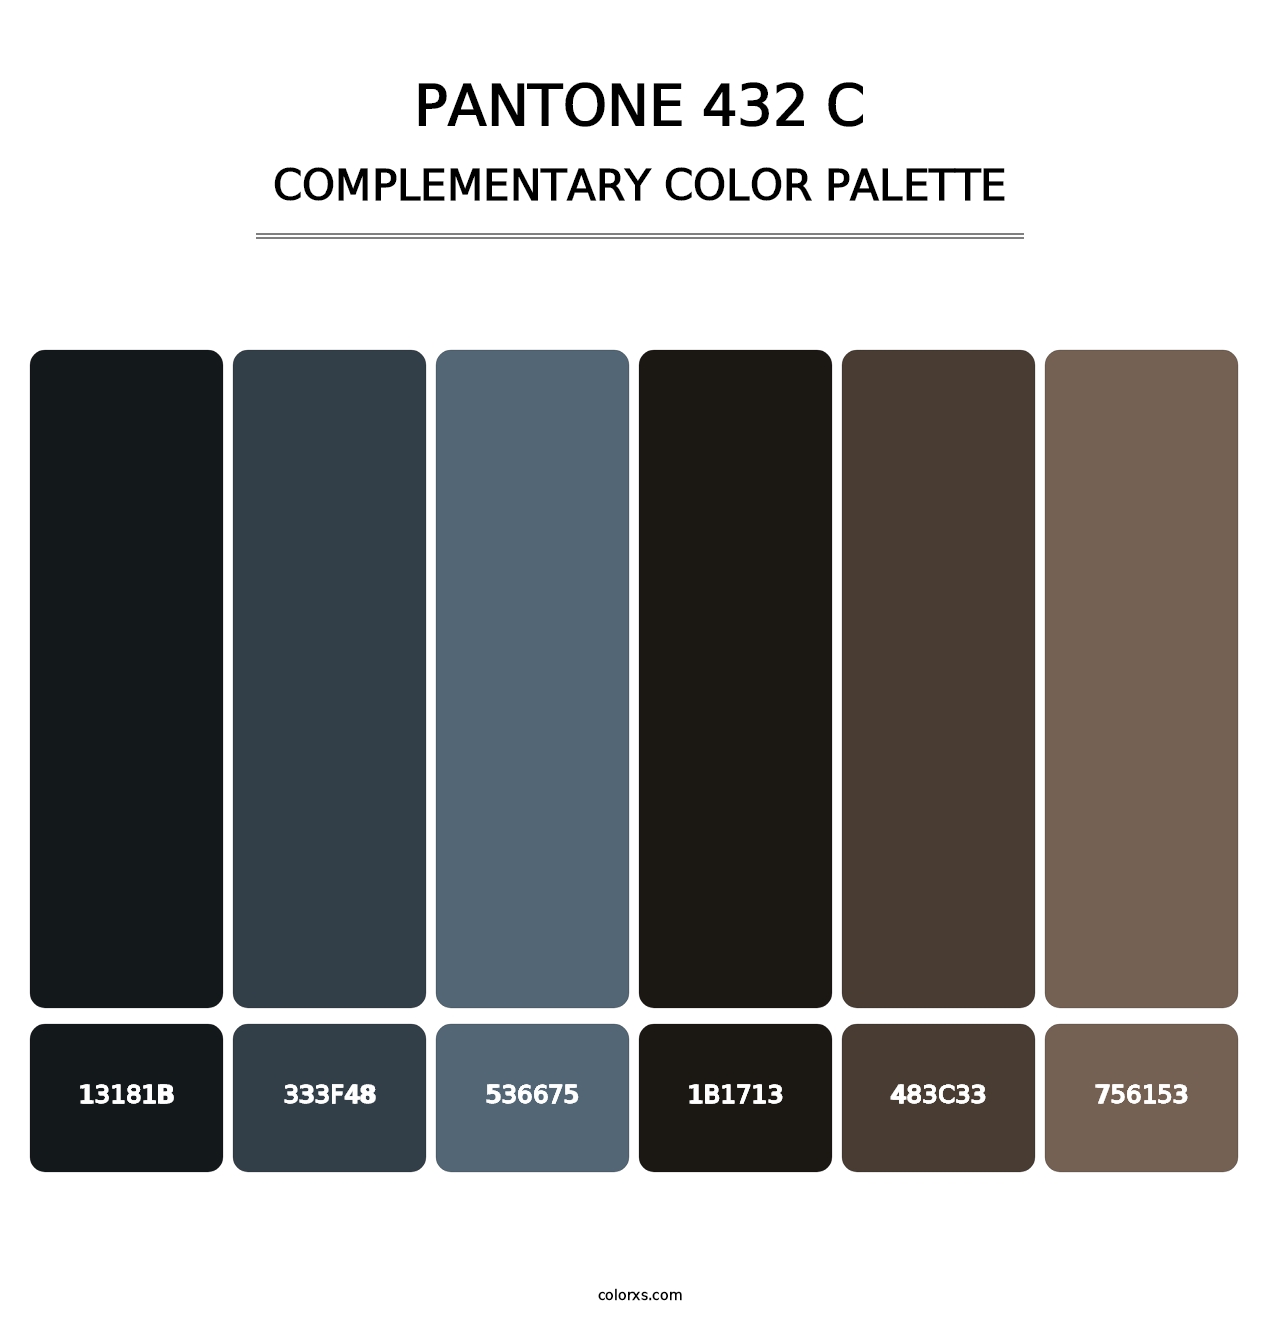 PANTONE 432 C - Complementary Color Palette